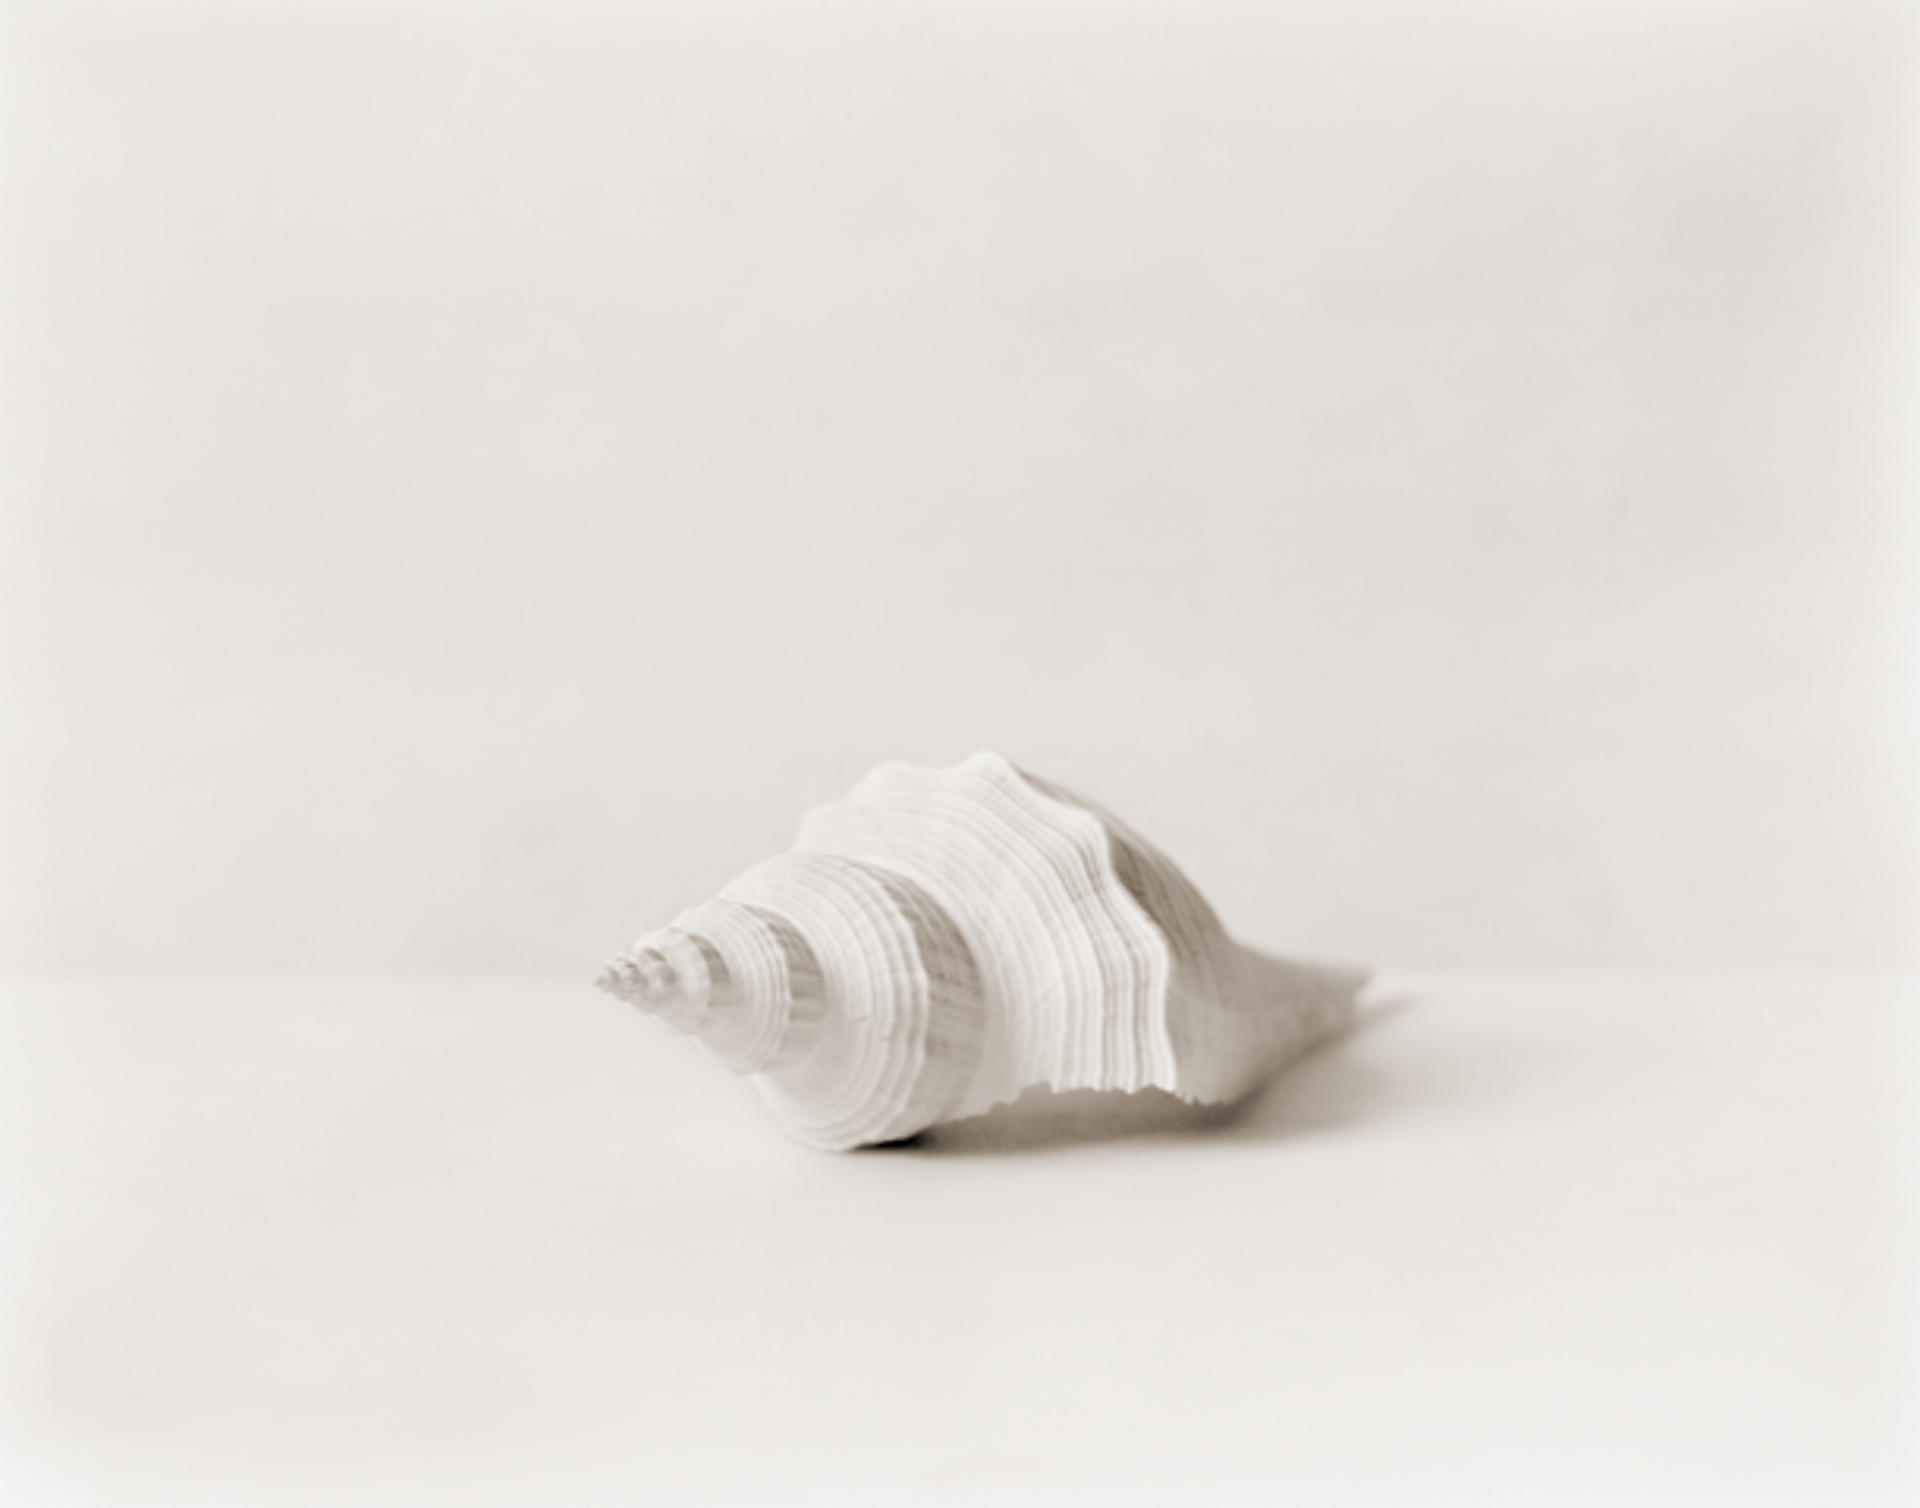 Shell by David Halliday